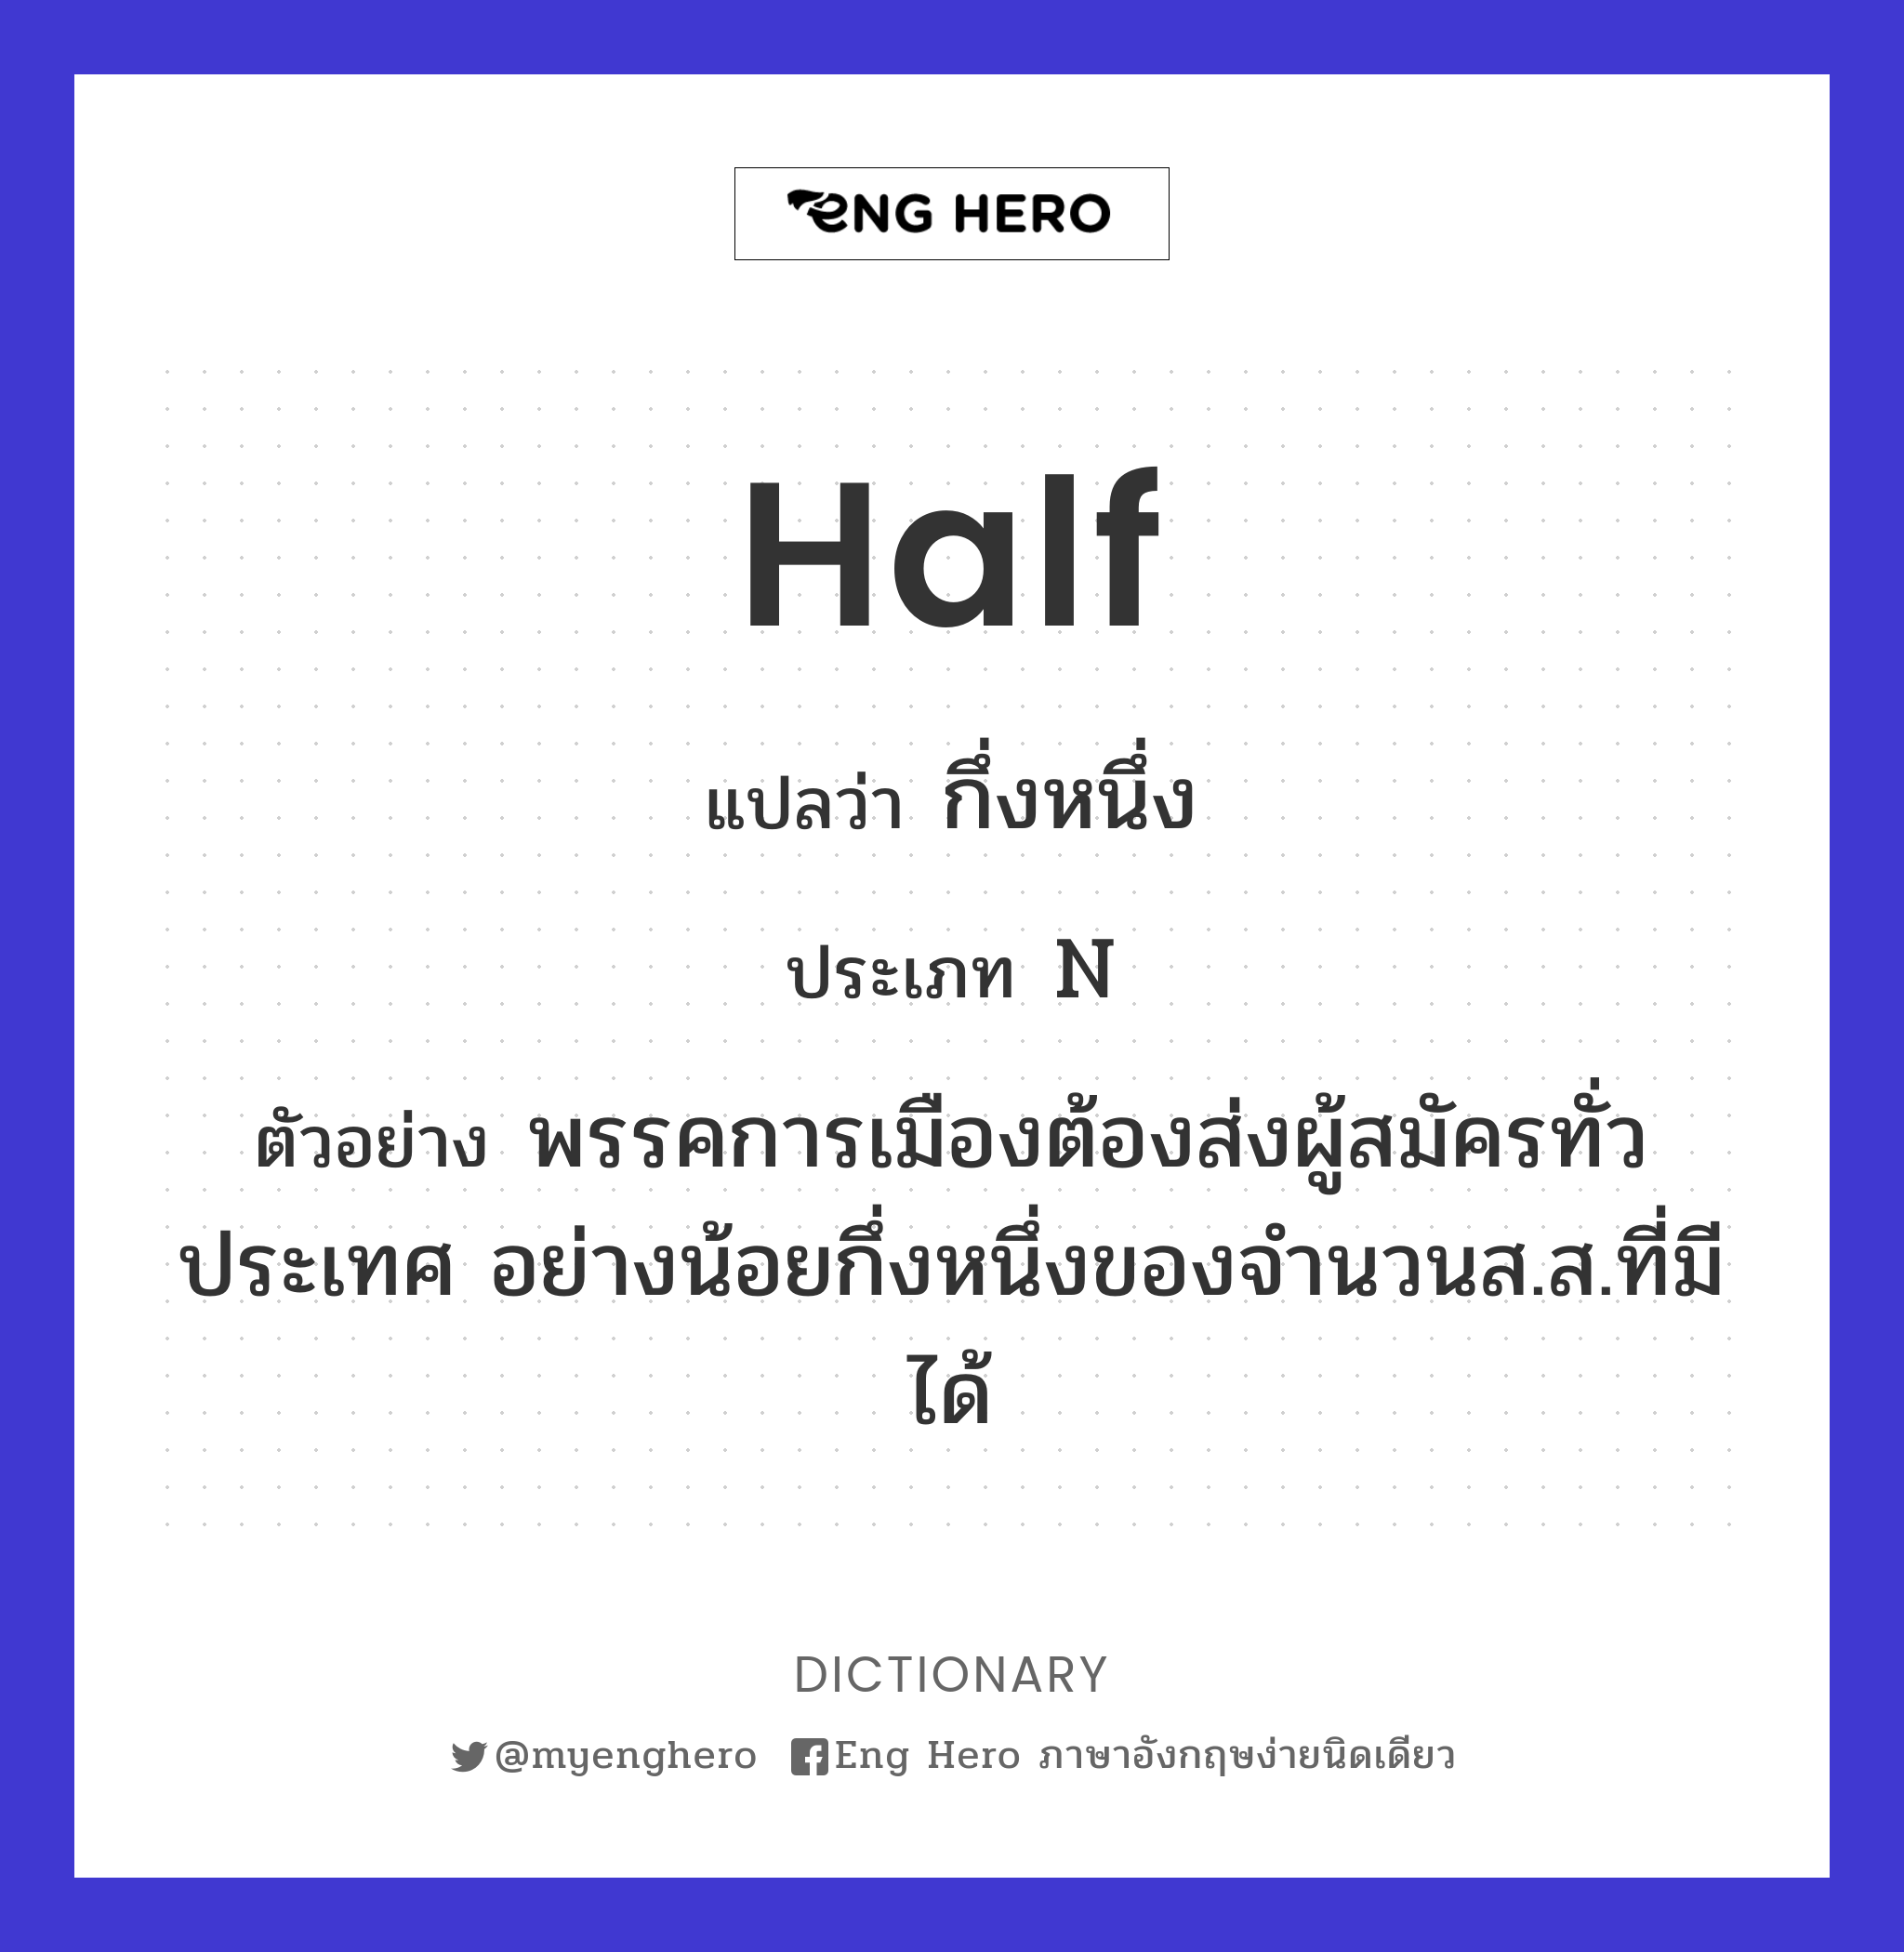 half